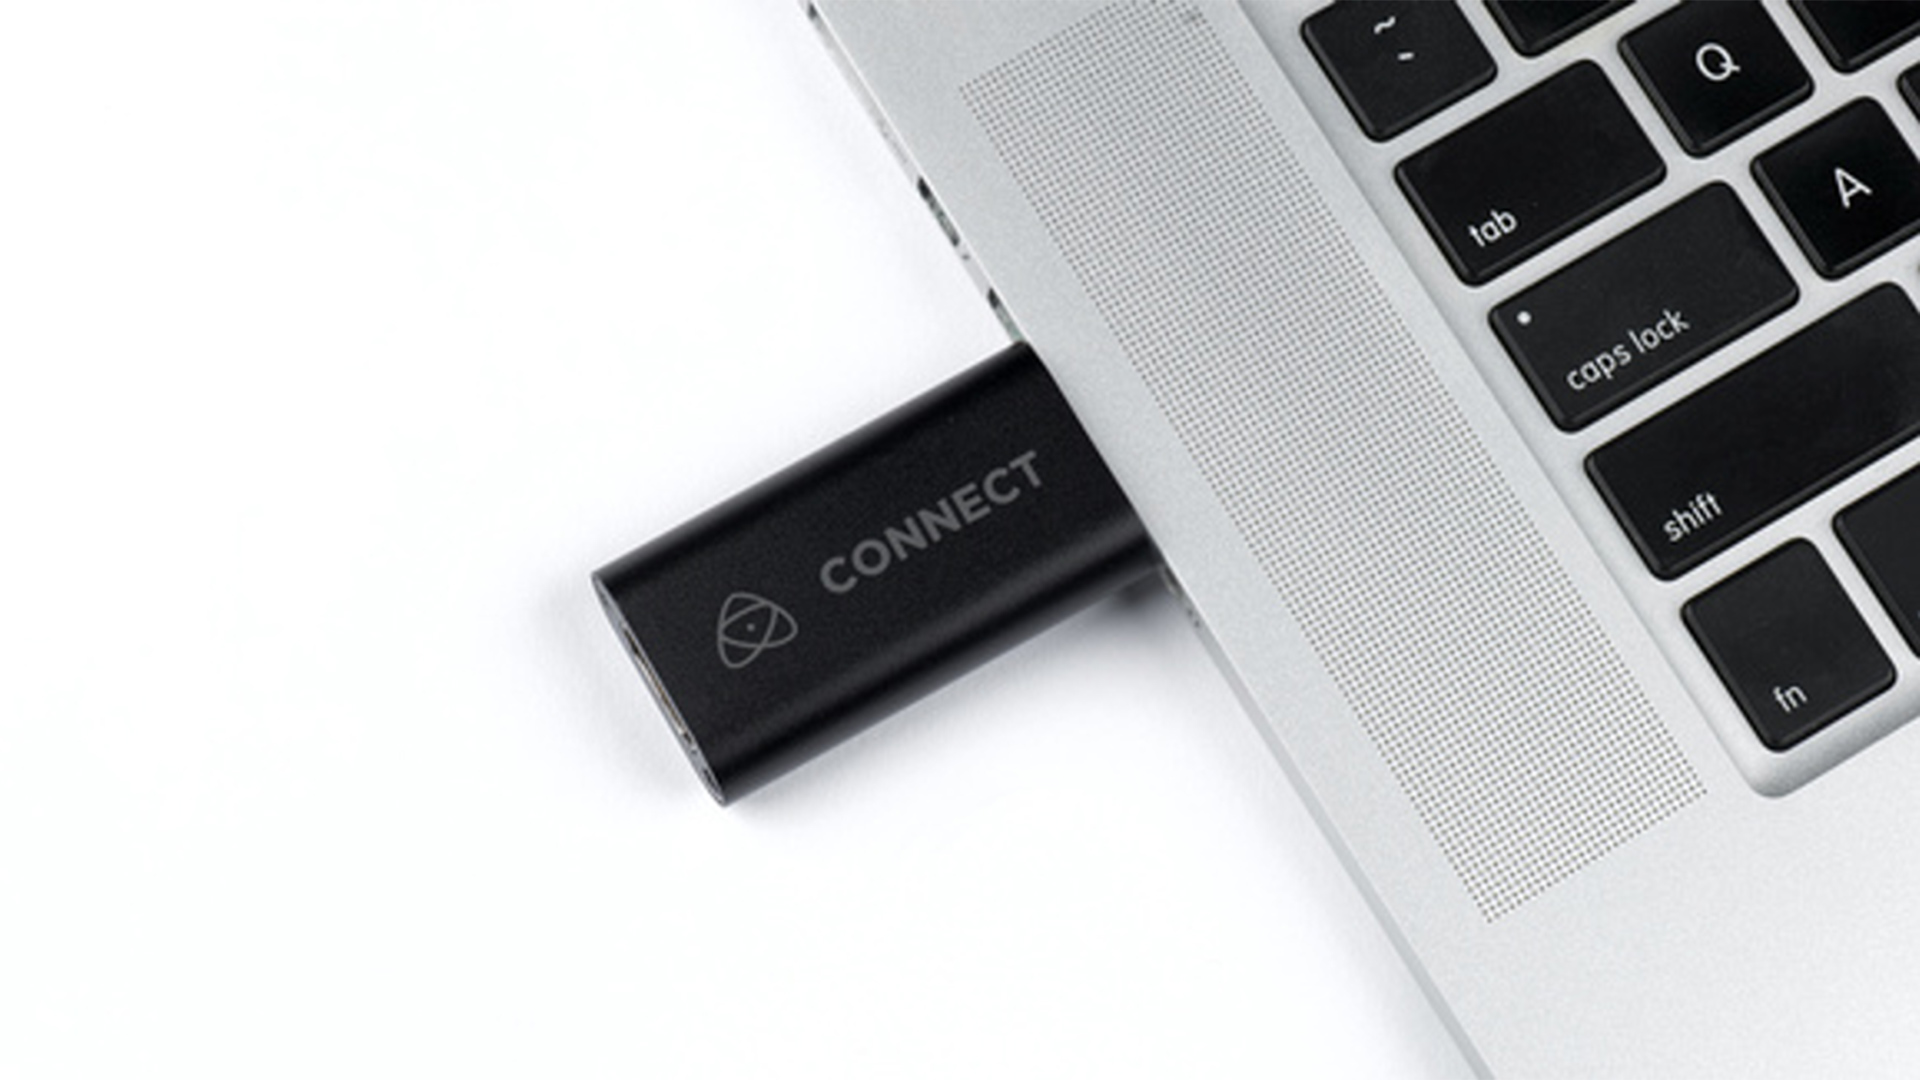 Atomos Connect USB to HDMI converter. Image: Atomos.